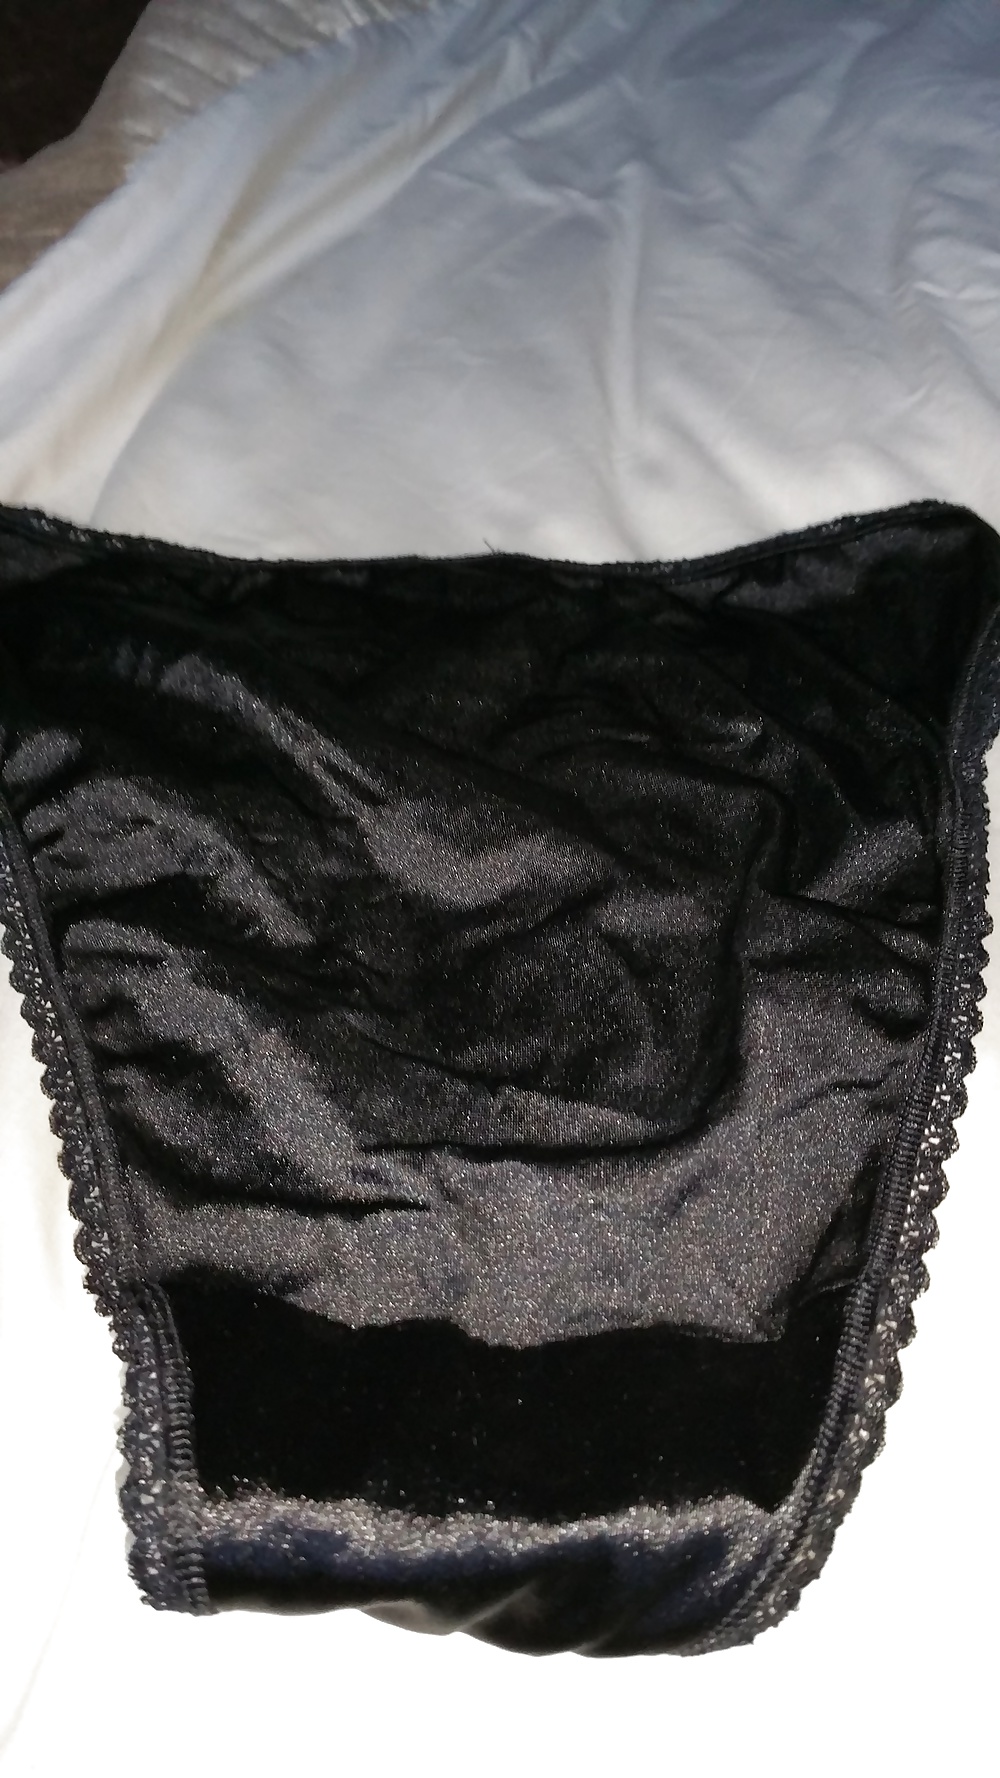 british milf black sexy panties full bum .pls comment adult photos